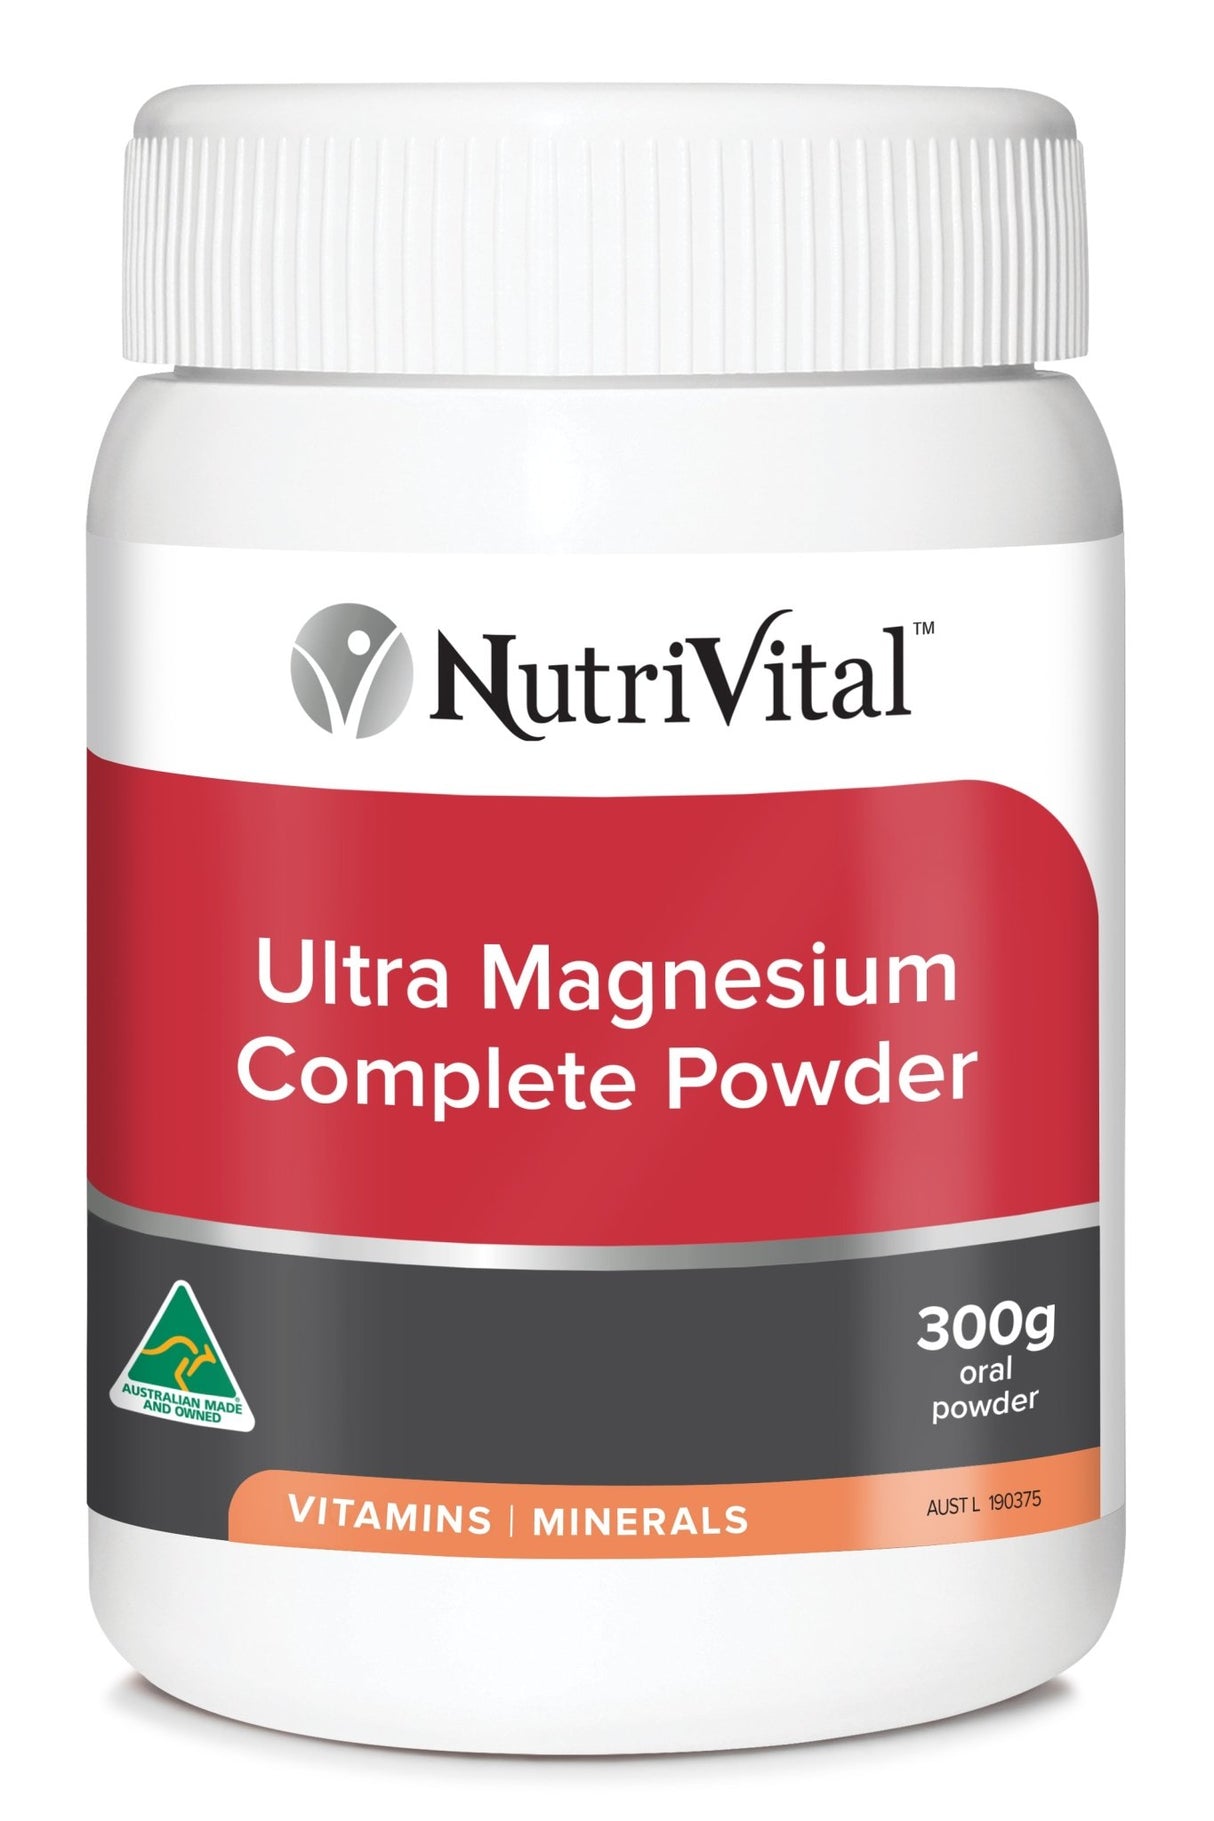 NutriVital Ultra Magnesium Complete Powder 300g Powder - Dr Earth - Supplements, Nutrivital